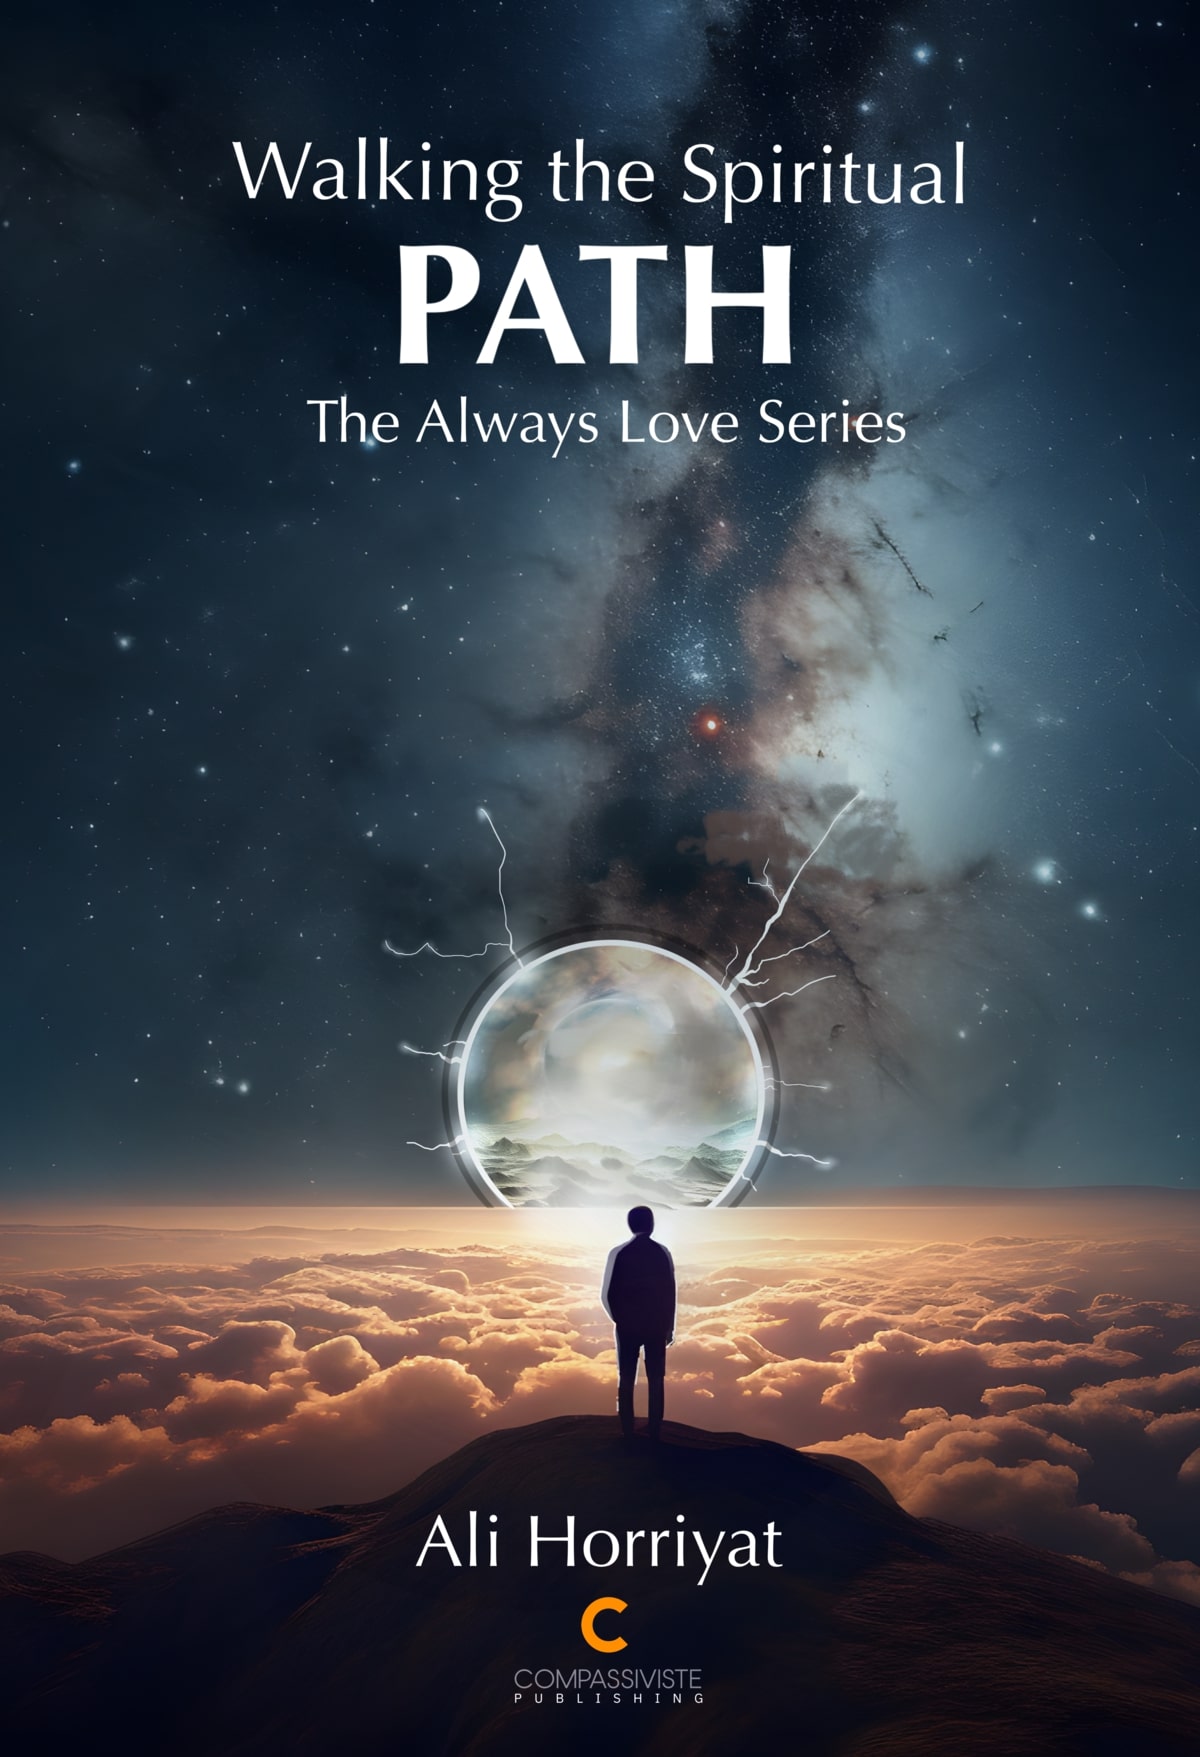 Book cover of Walking the Spiritual Path by Ali Horriyat